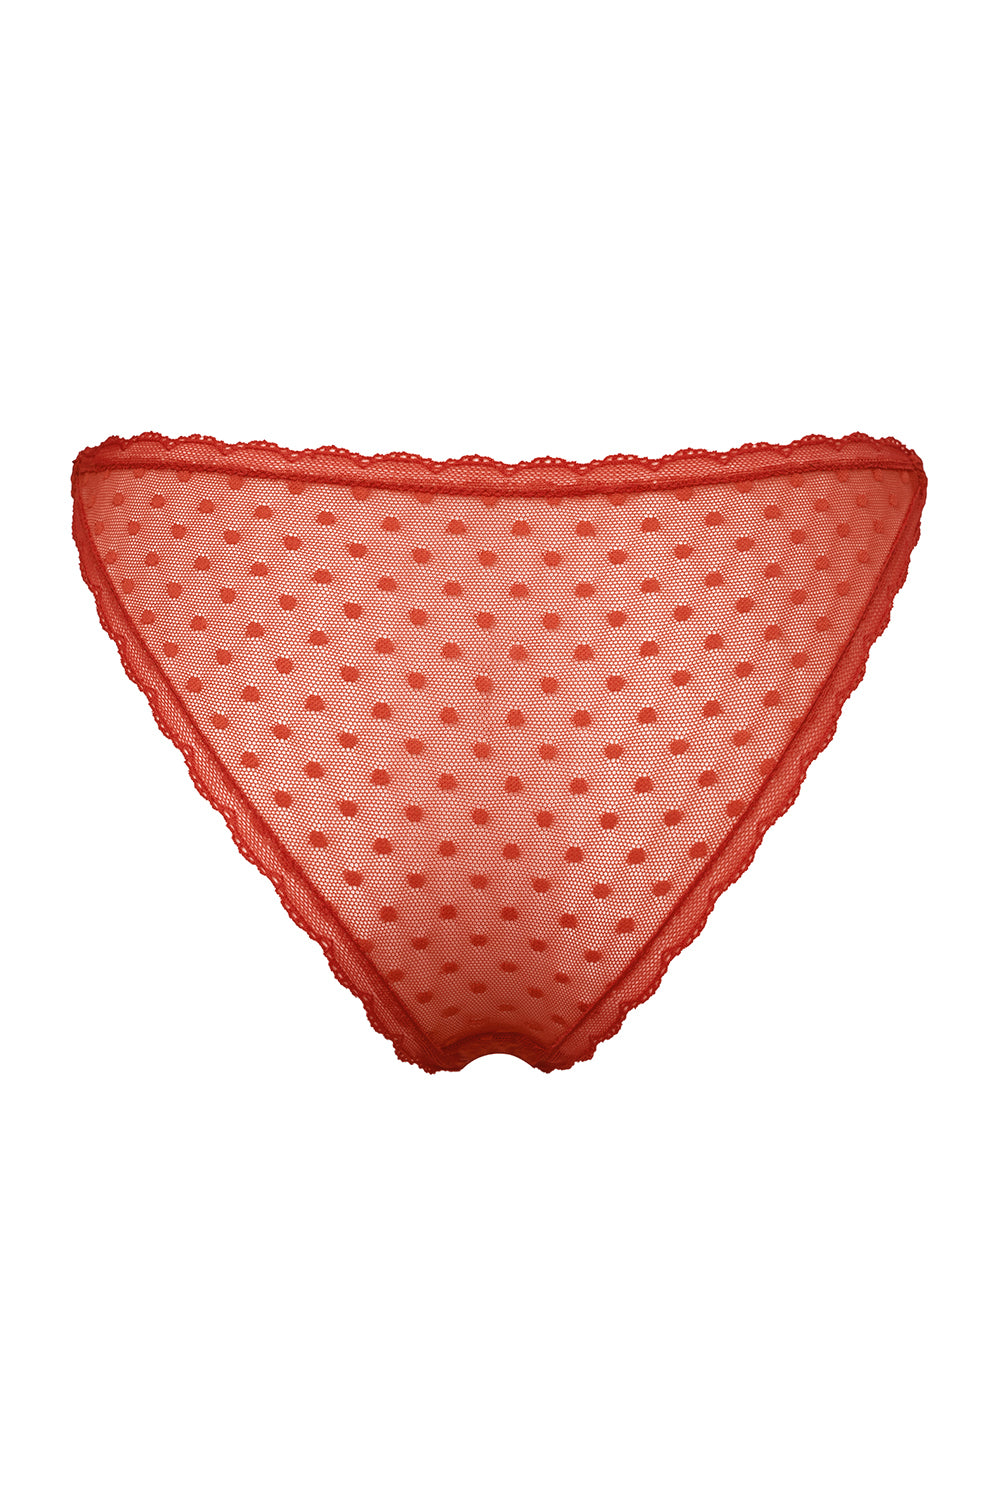 Amari red panties